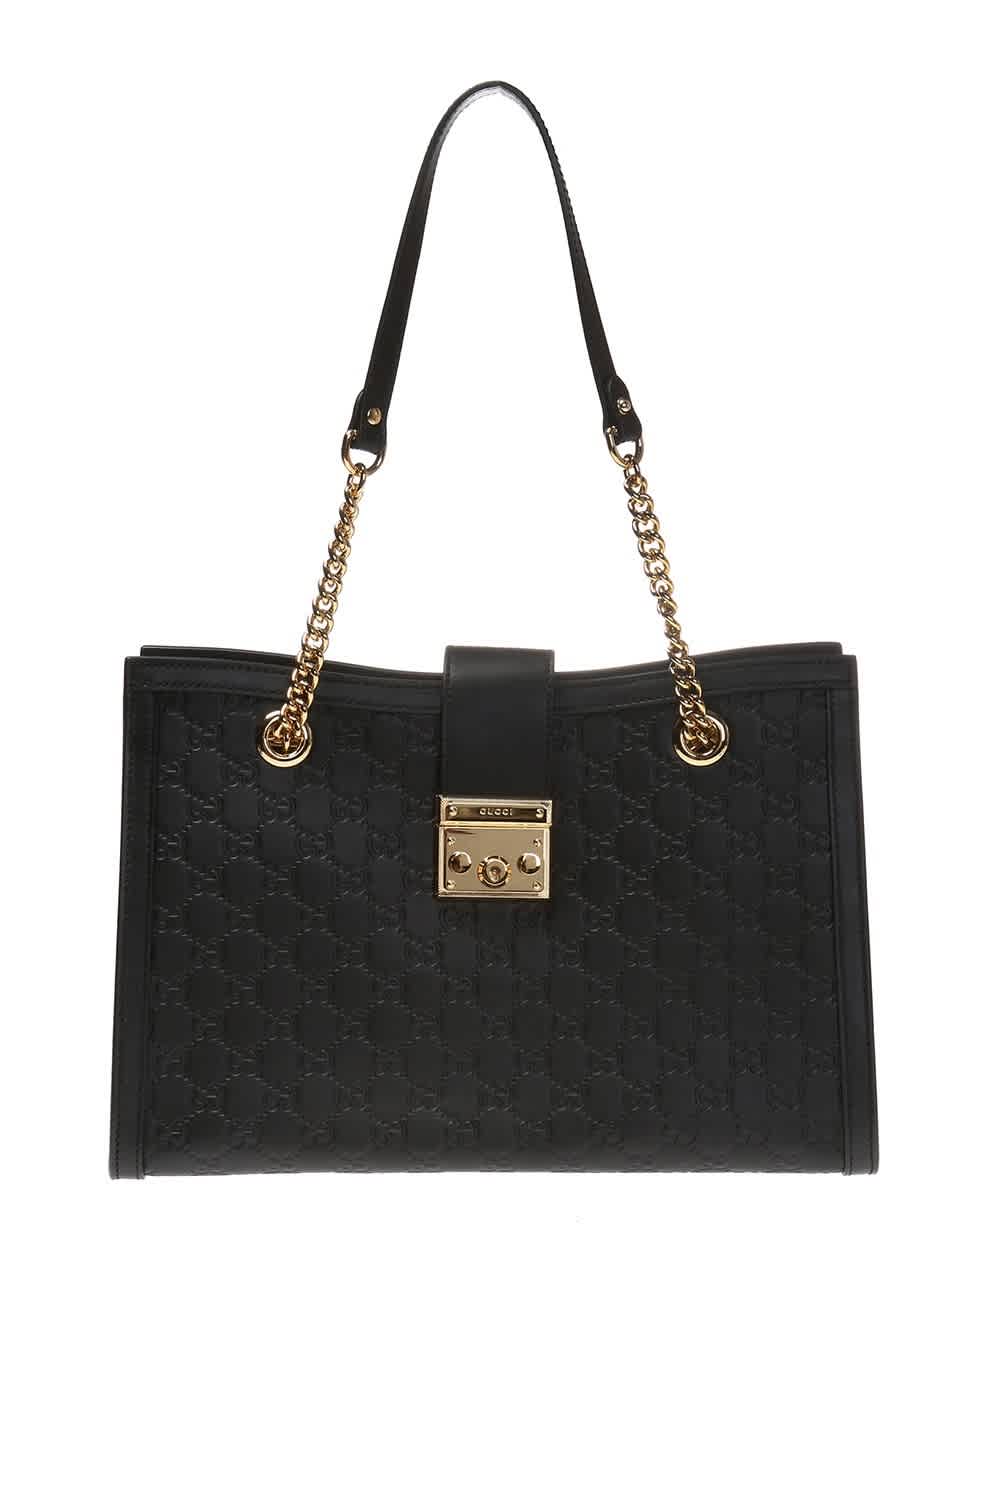 Gucci Black Padlock Signature Medium Shoulder Bag In Black,gold Tone,two Tone